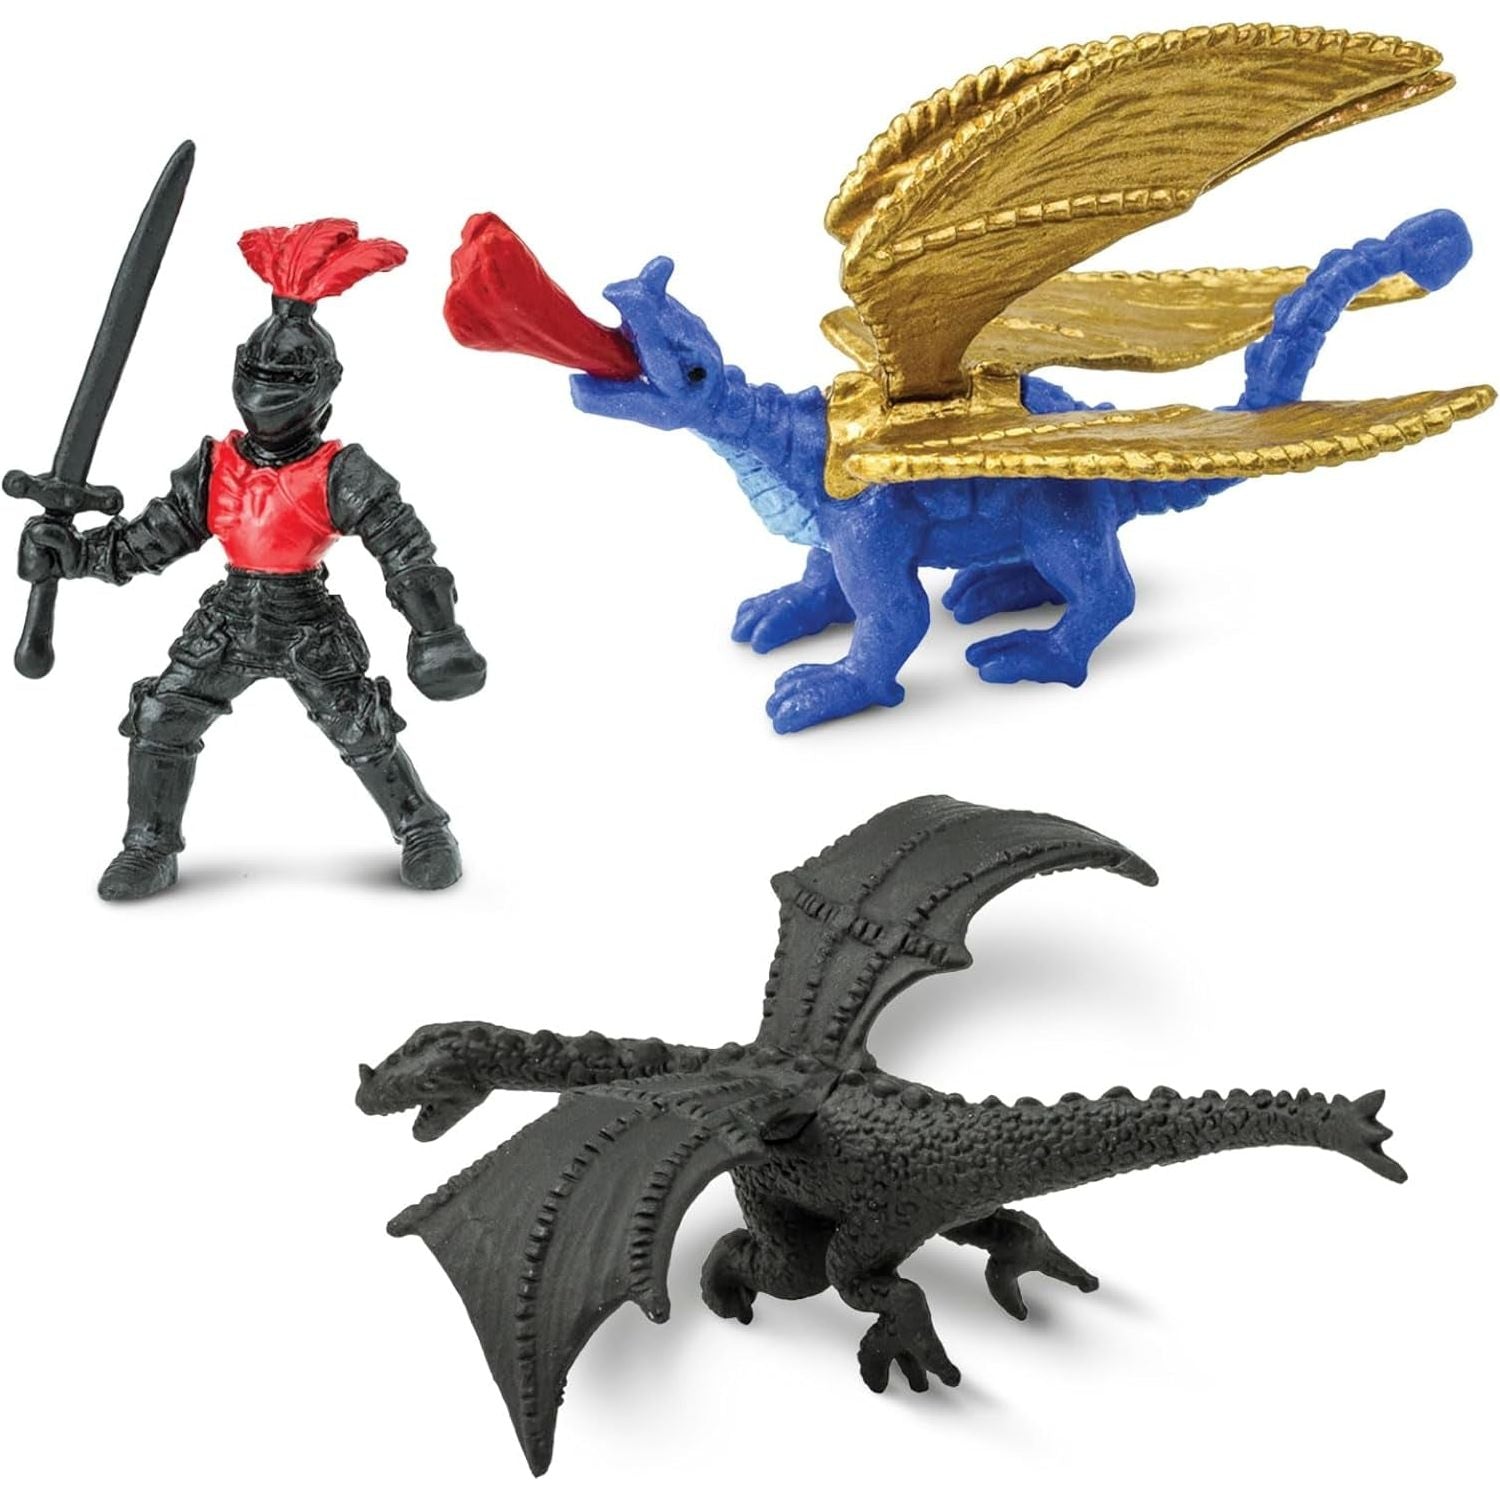 Knights & Dragons Miniature Figurines